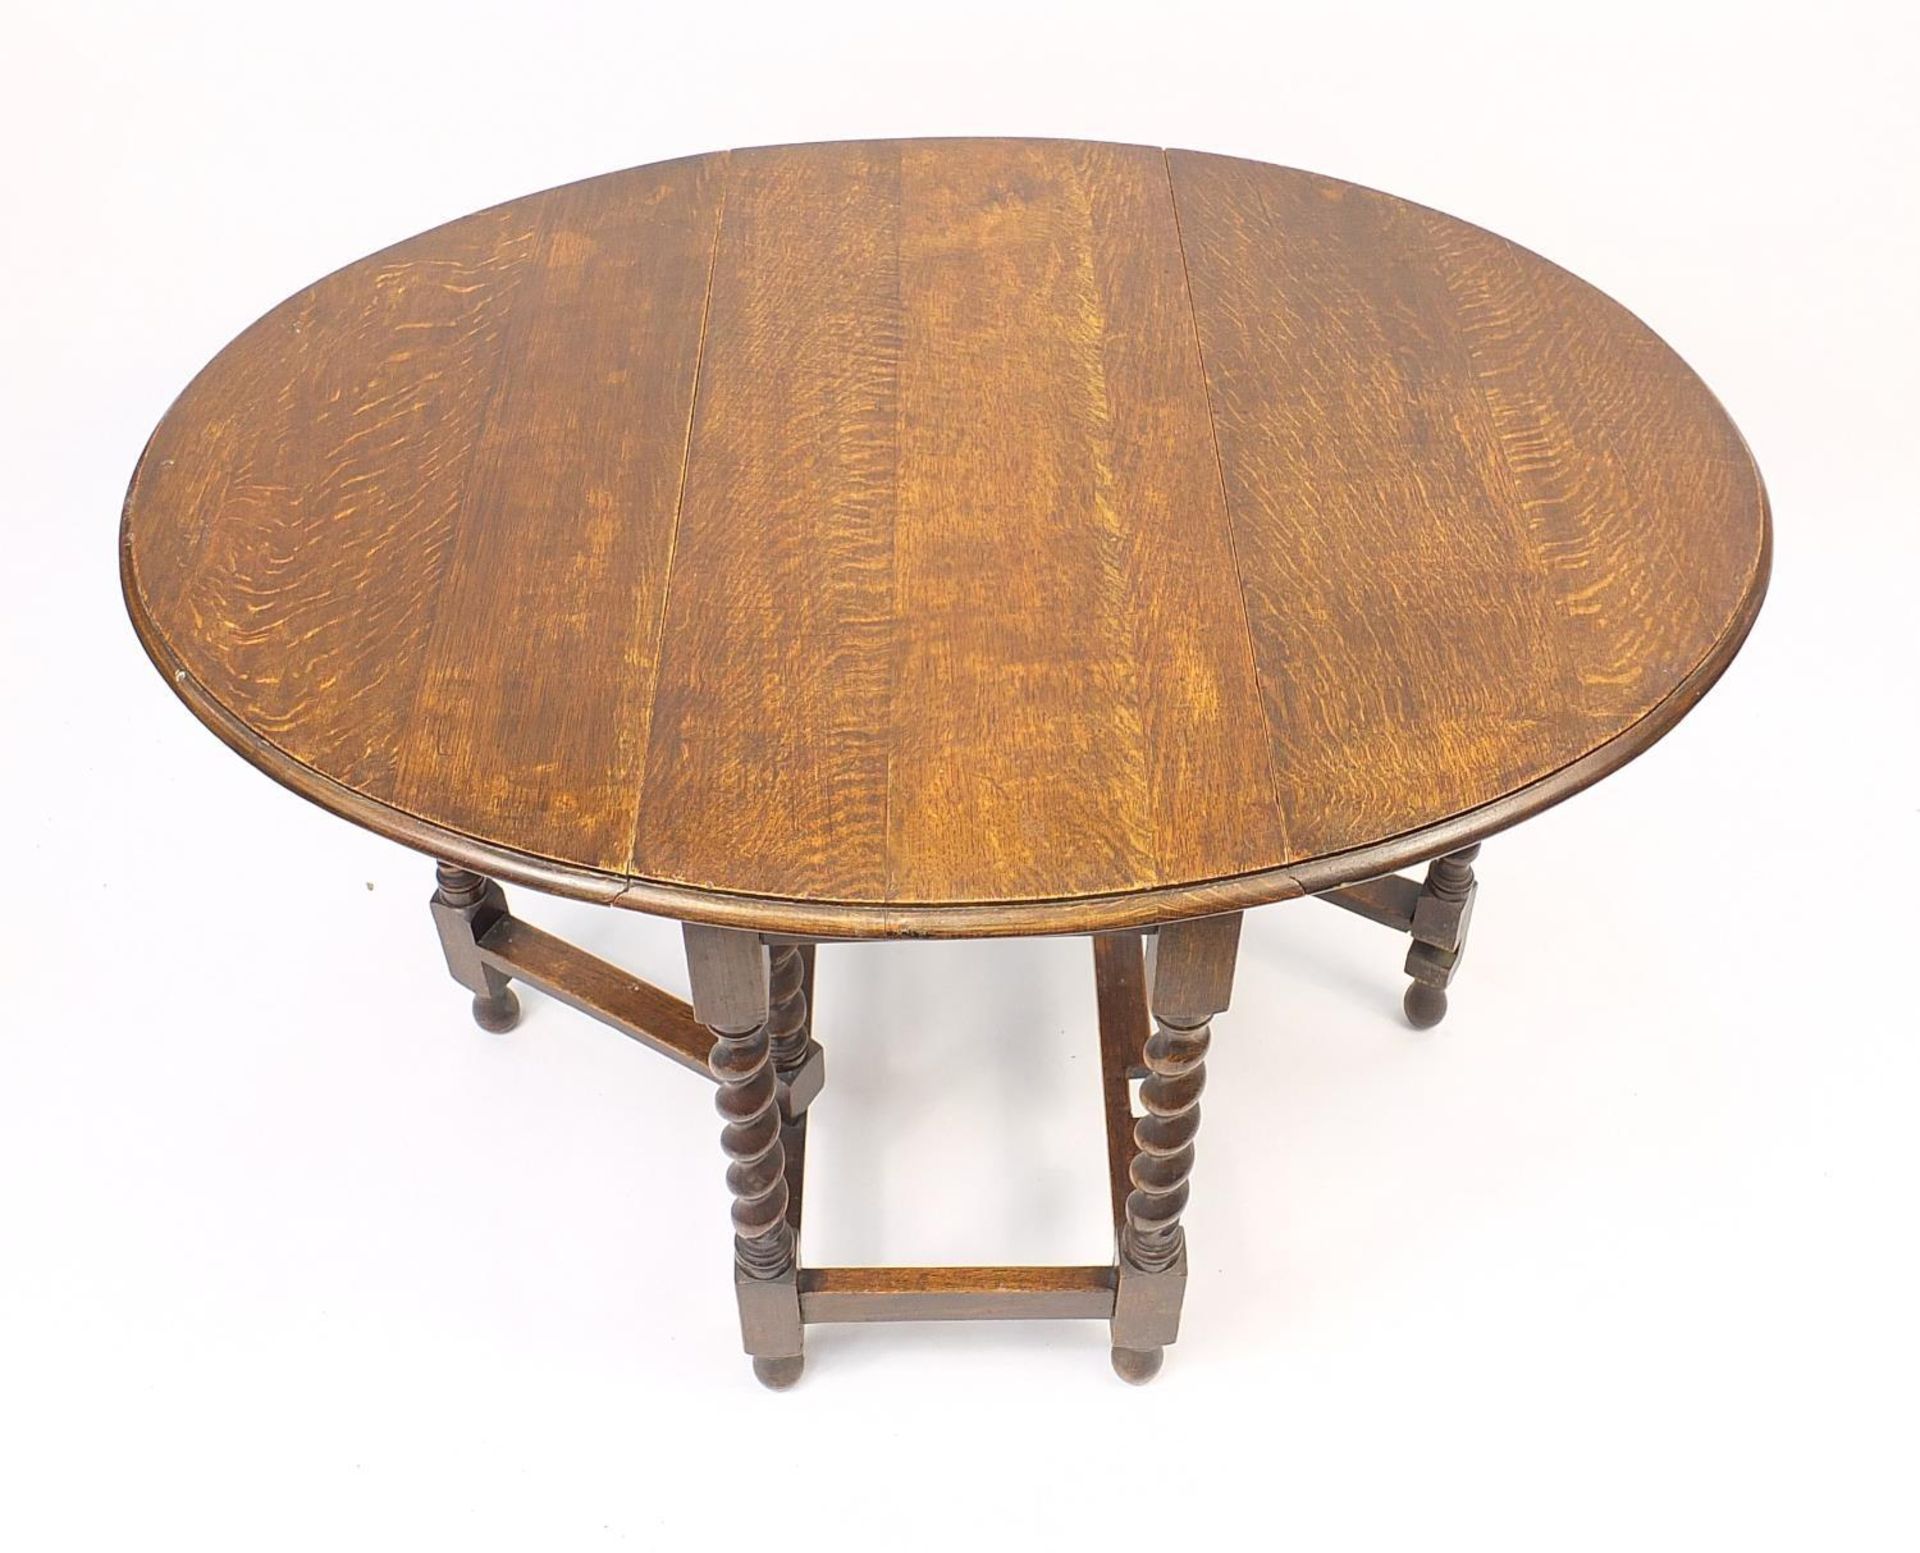 Oval oak gate leg table with barley twist legs, 73cm H x x 92cm W x 42cm D when closed : - Image 3 of 4